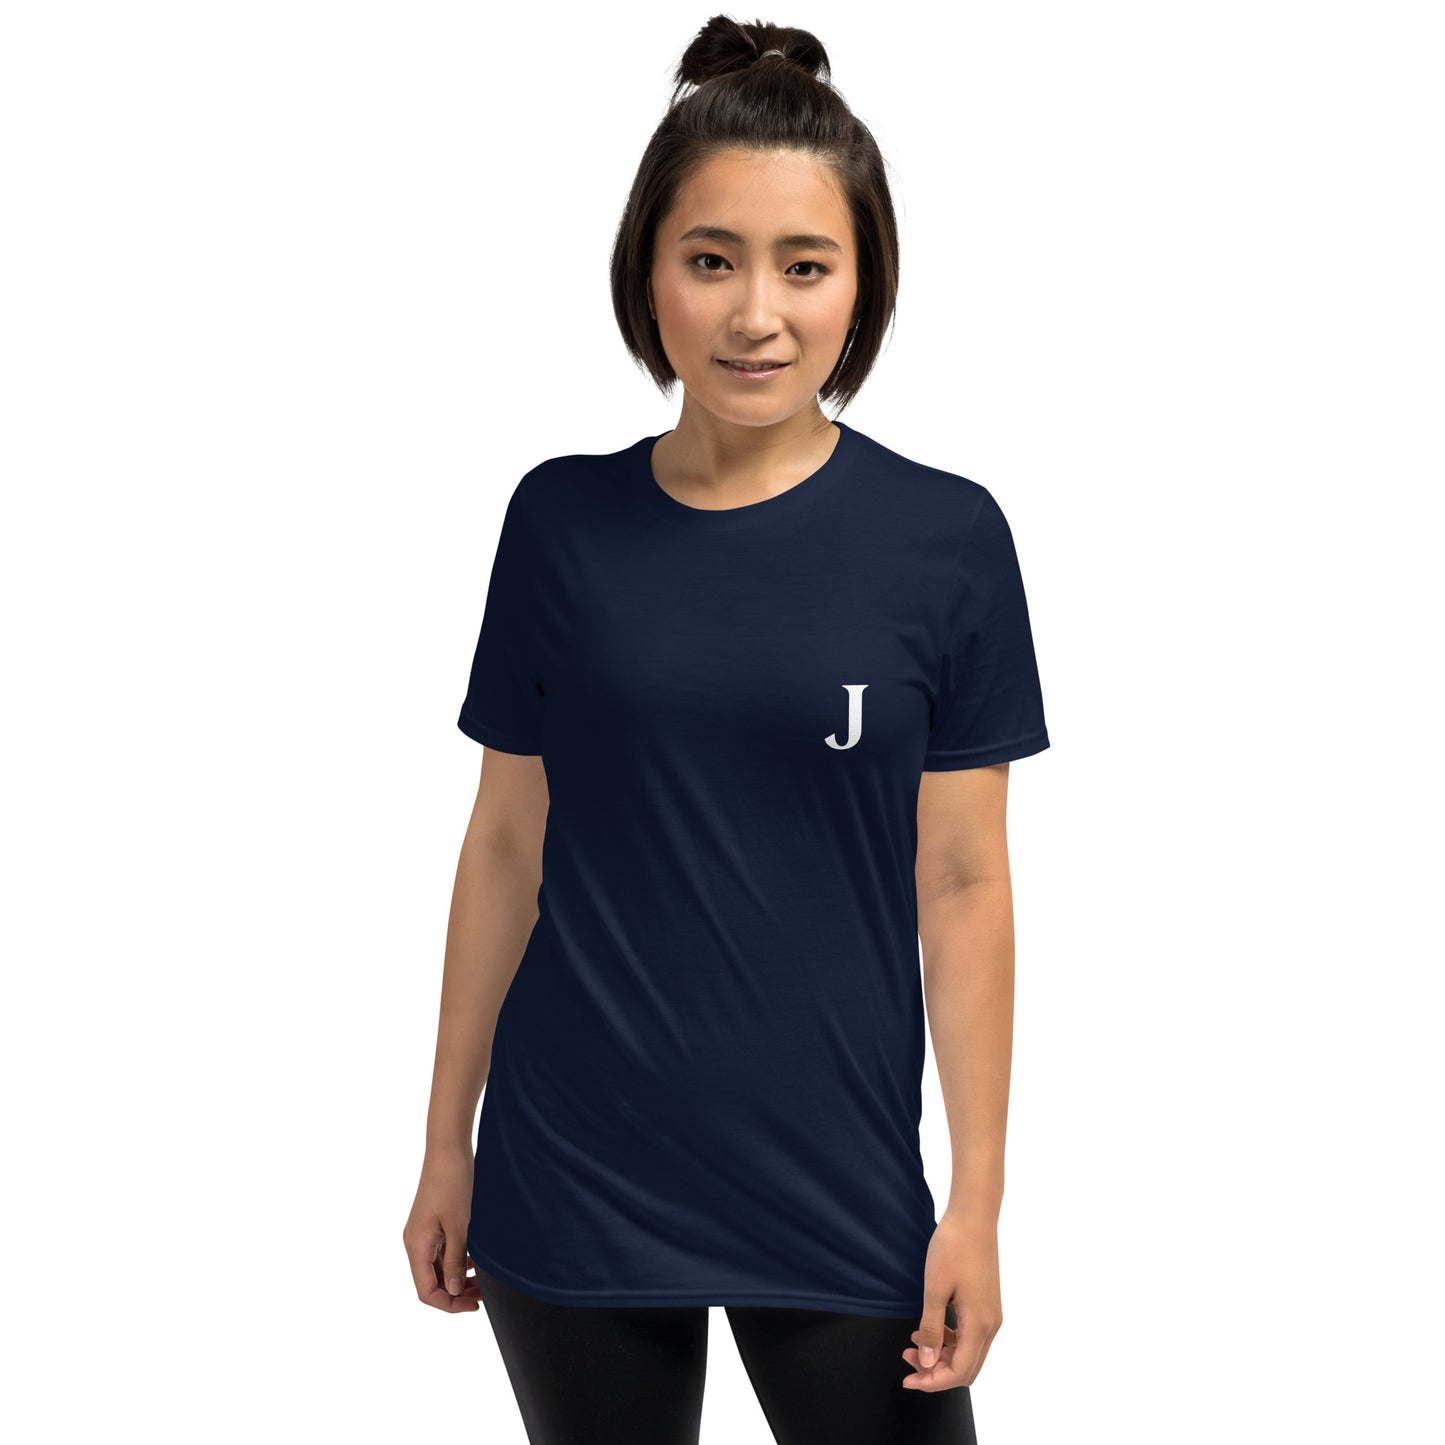 The Juggernaut Collection - Small "J" T-Shirt